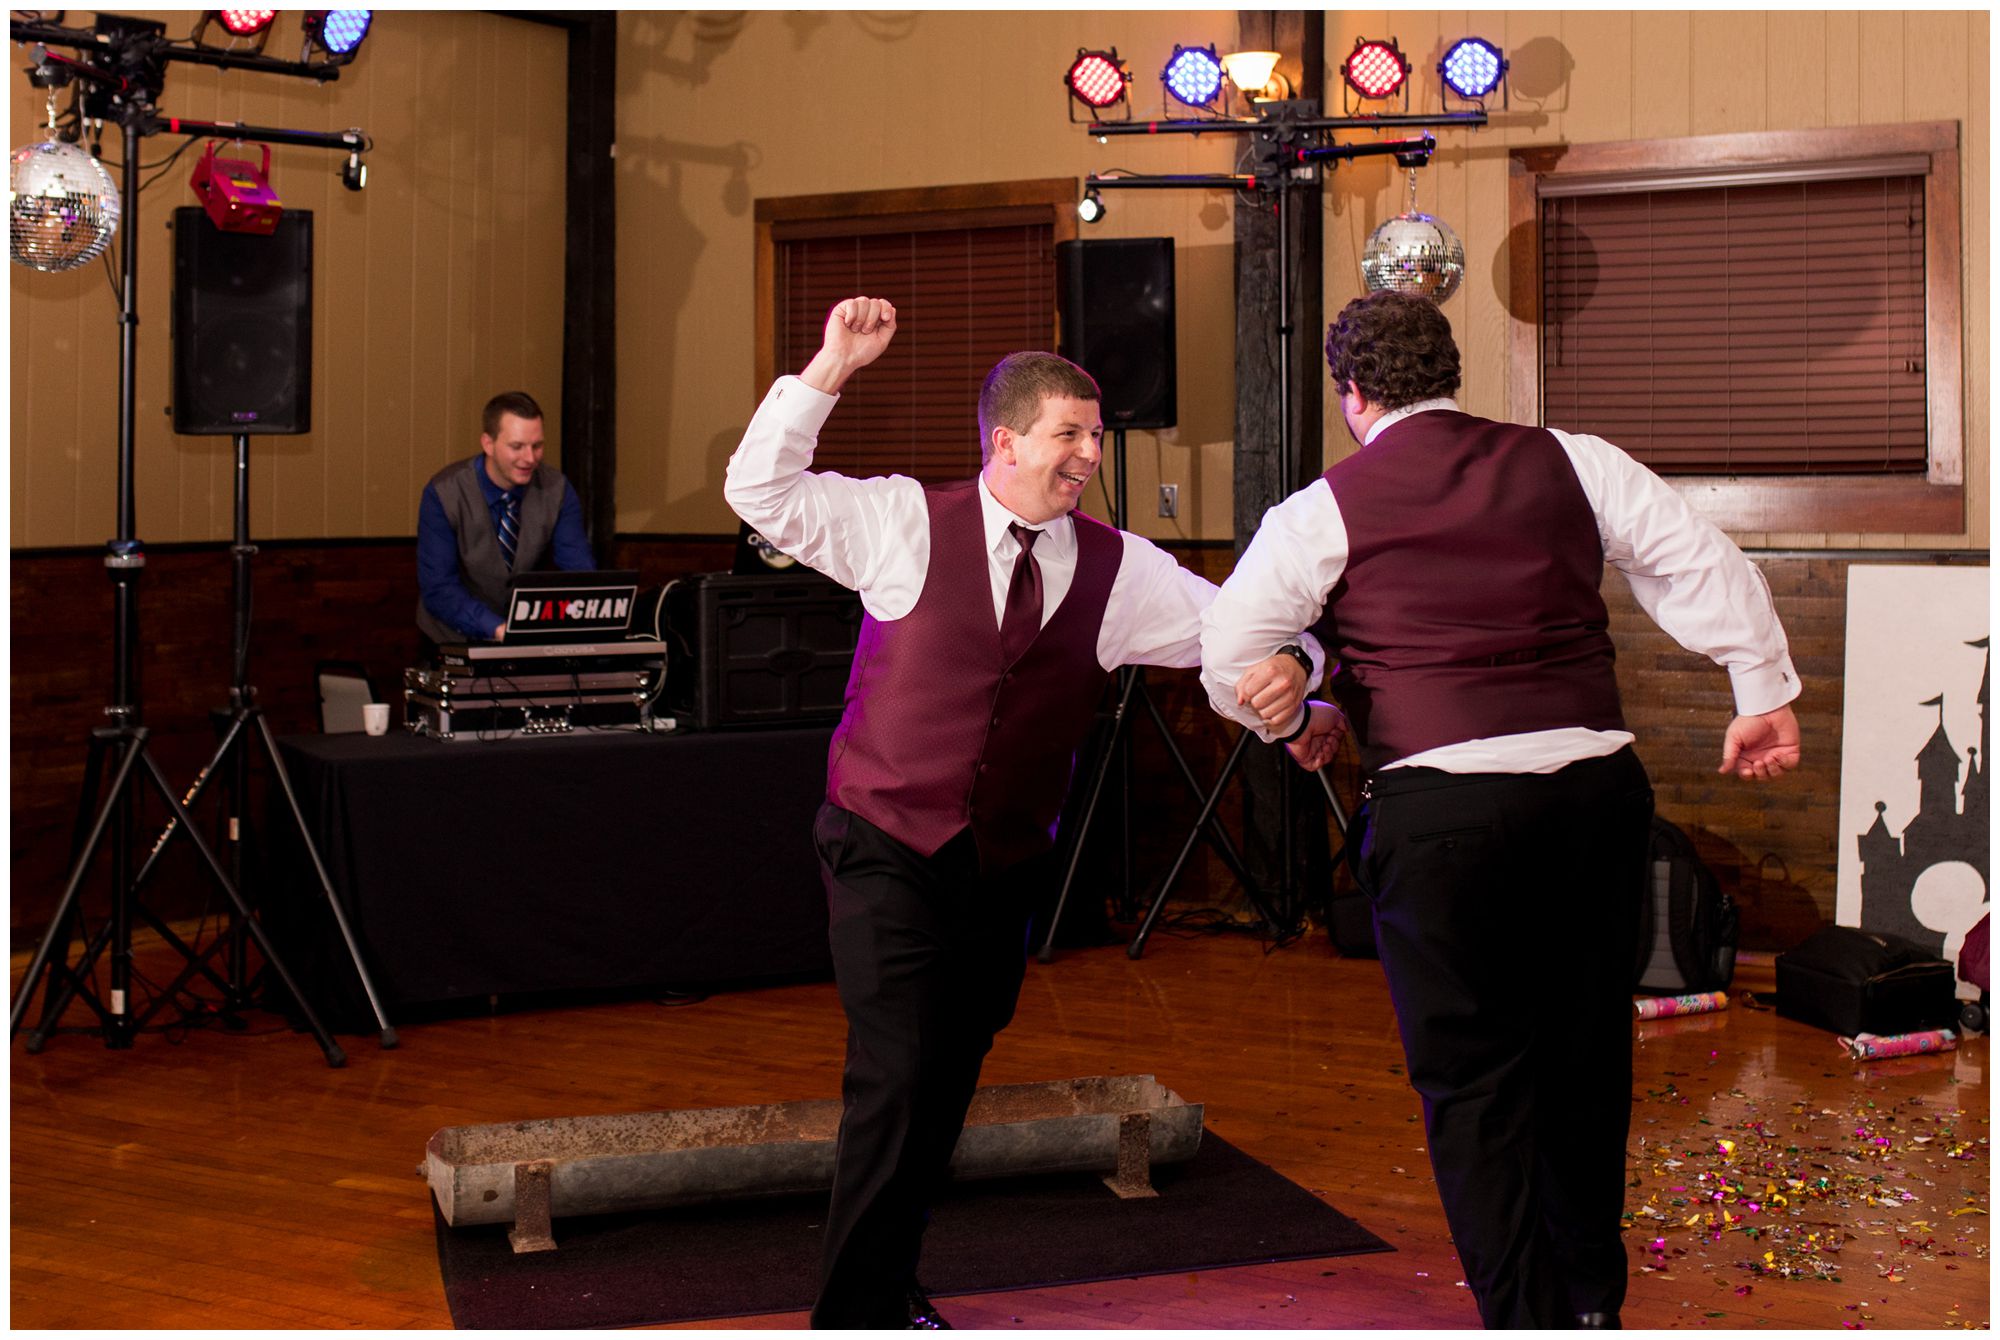 groom's brothers dance around hog trough during wedding reception at Goeglein Homestead